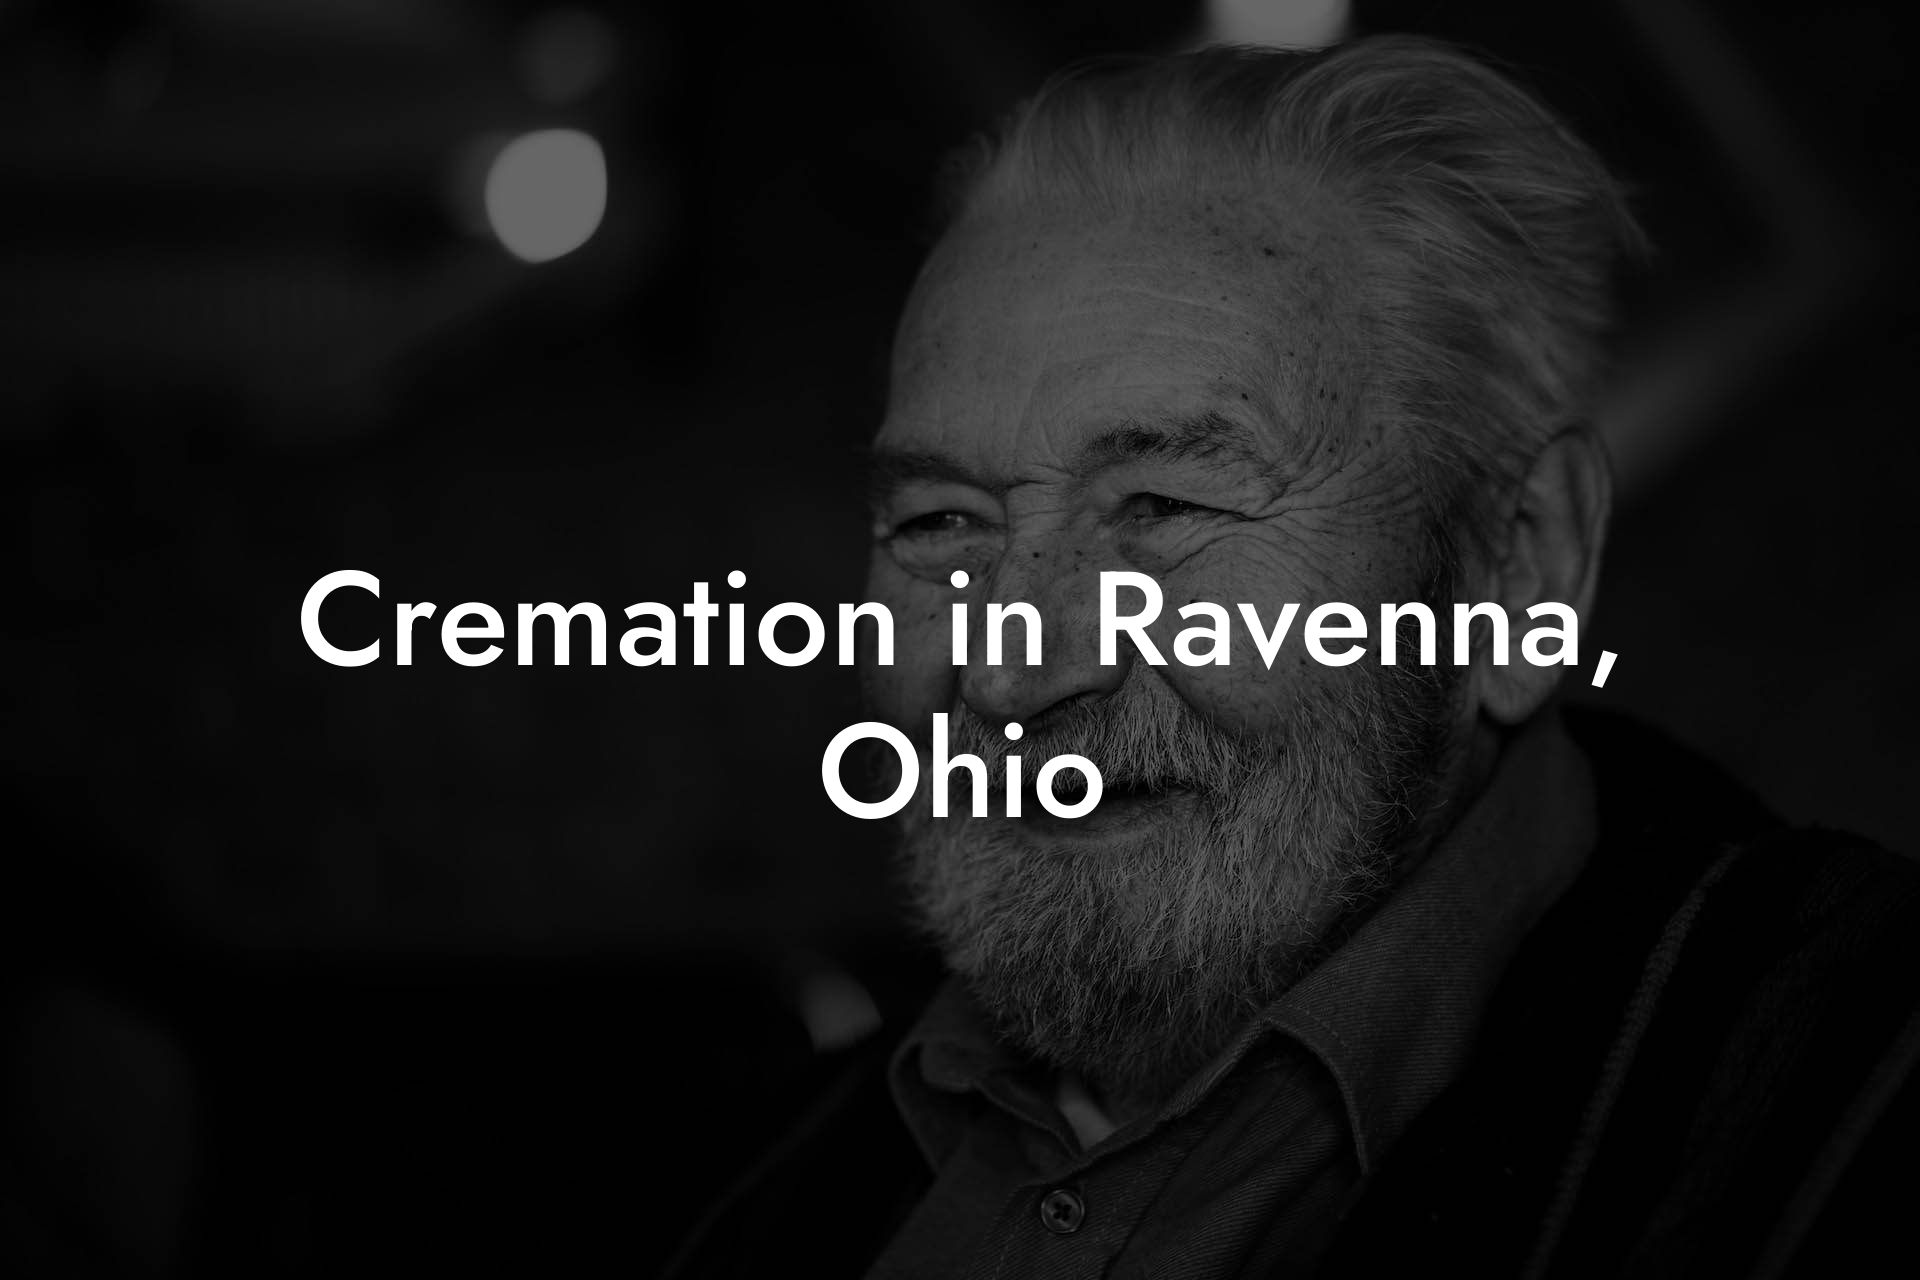 Cremation in Ravenna, Ohio